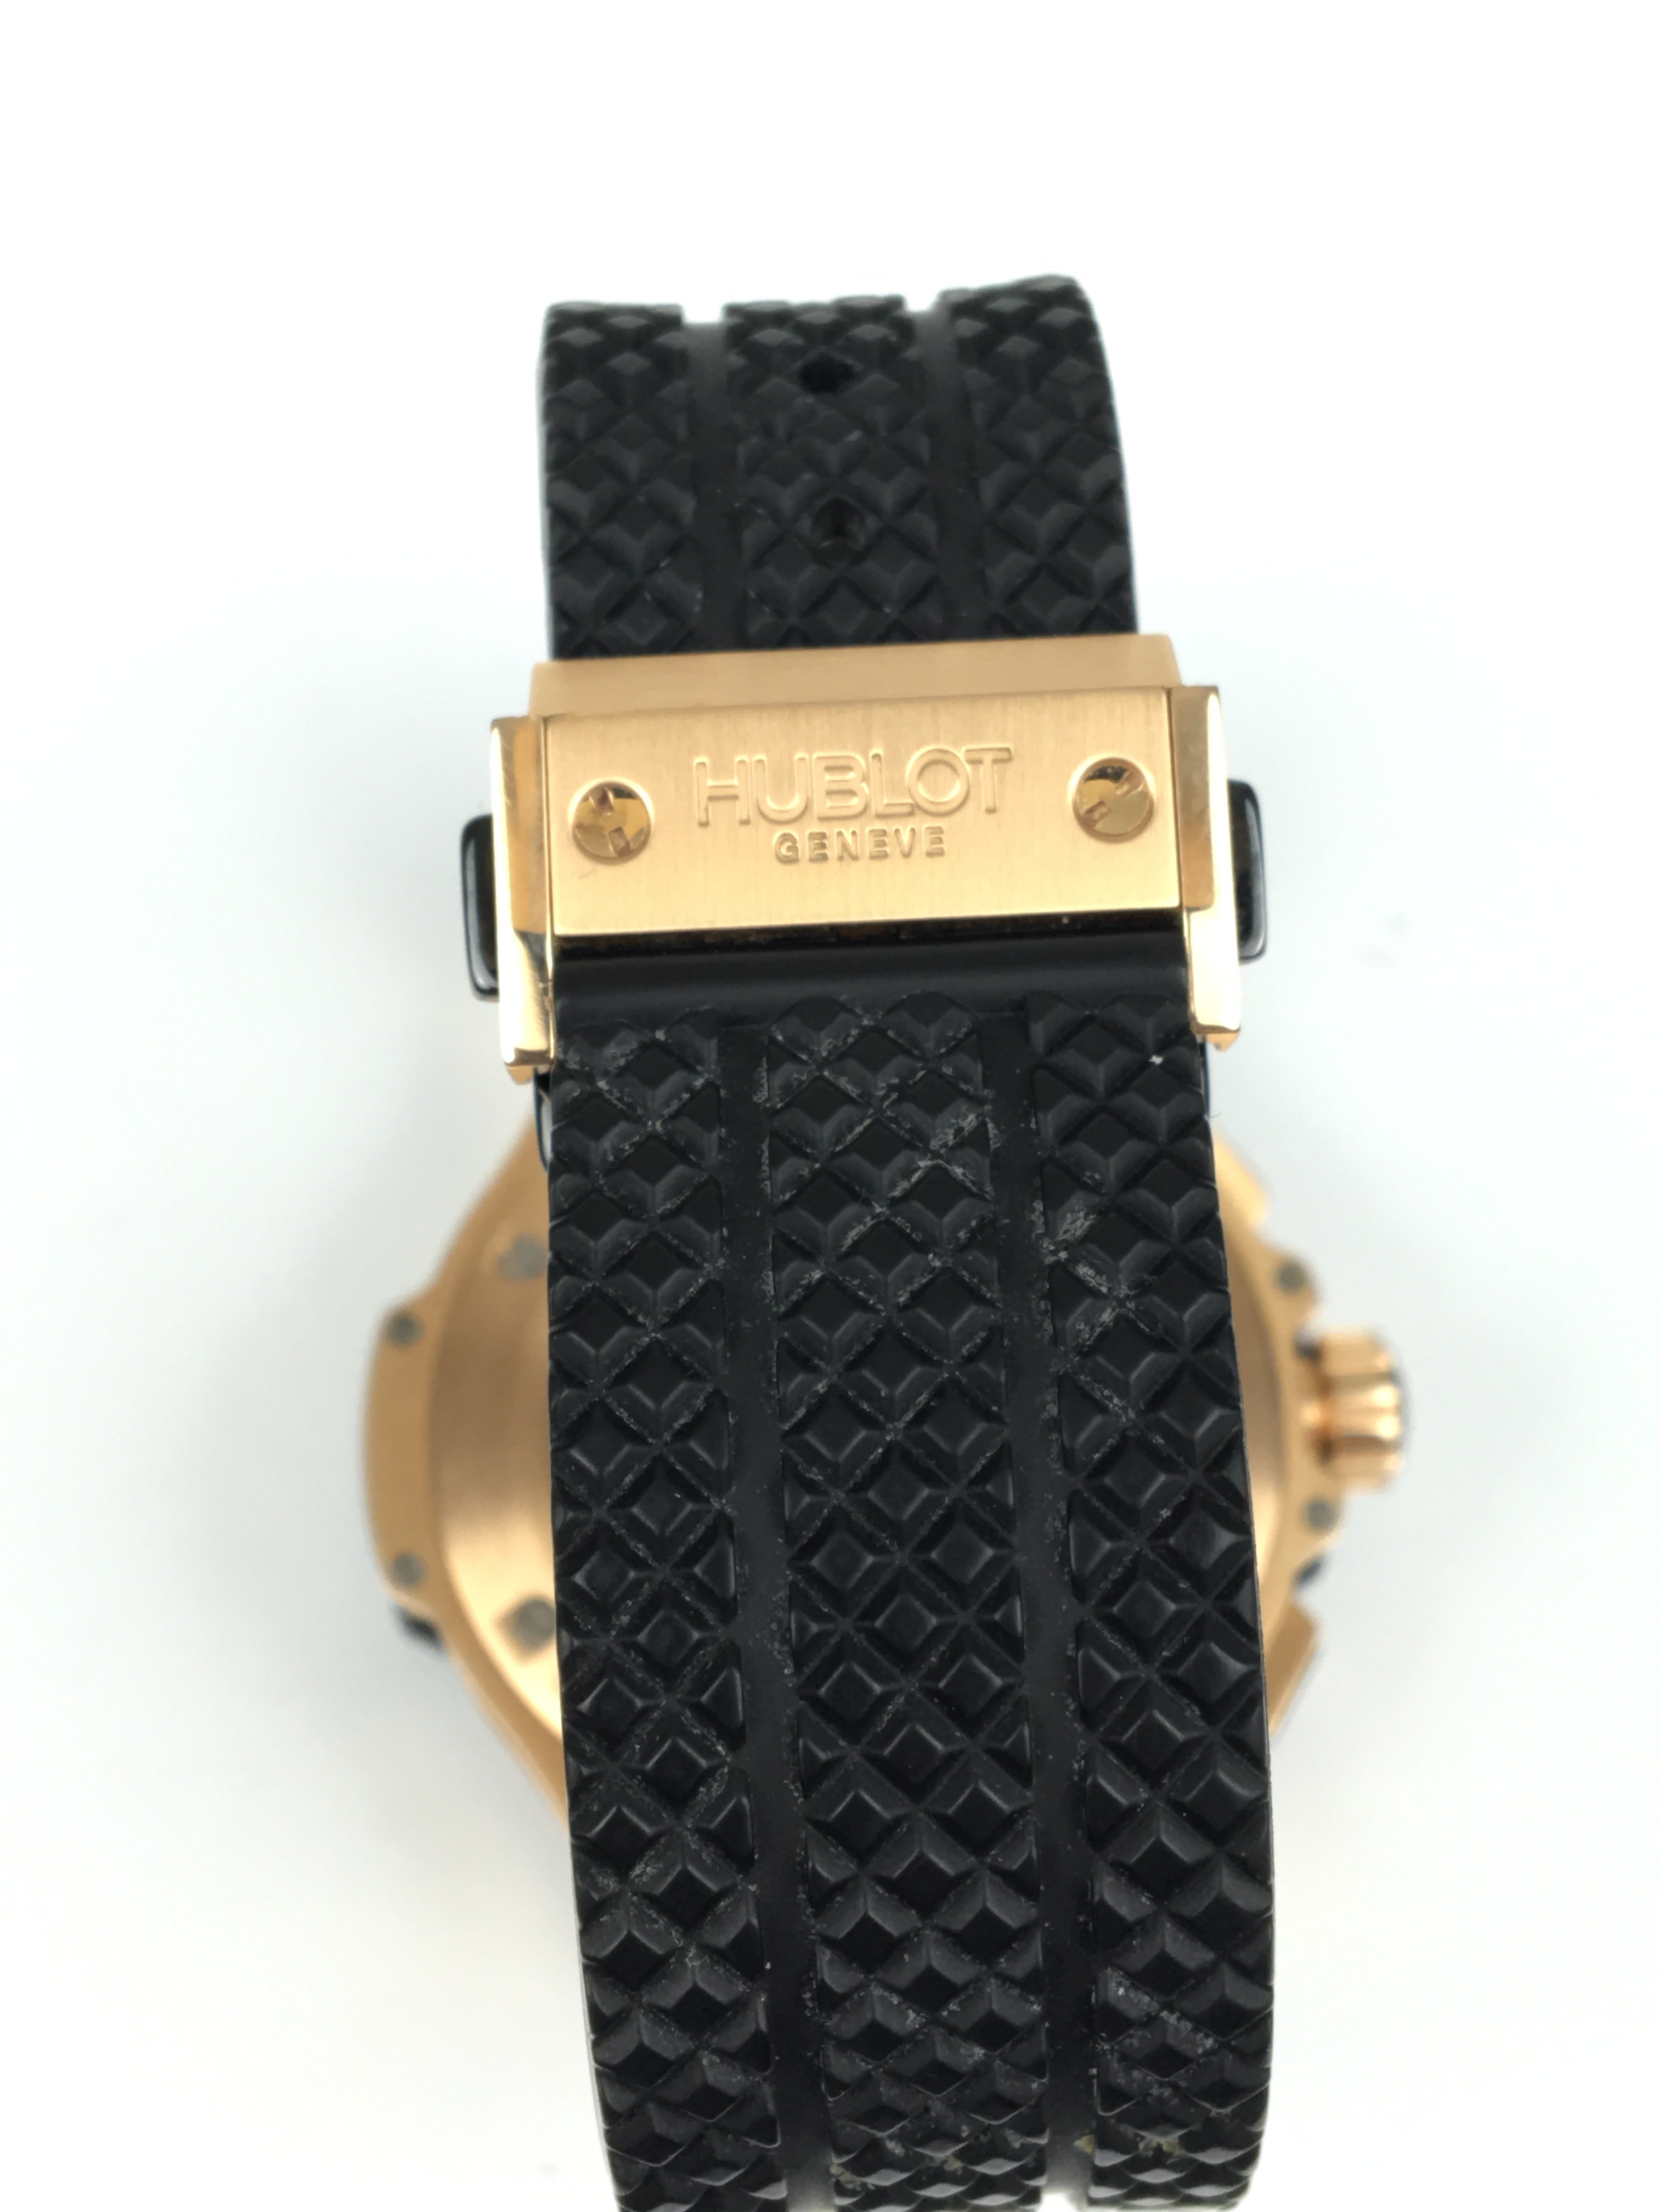 A GENTLEMANS 18K GOLD HUBLOT GENEVE BIG BANG AUTOMATIC WRIST WATCH •Black carbon fibre designed dial - Image 8 of 10